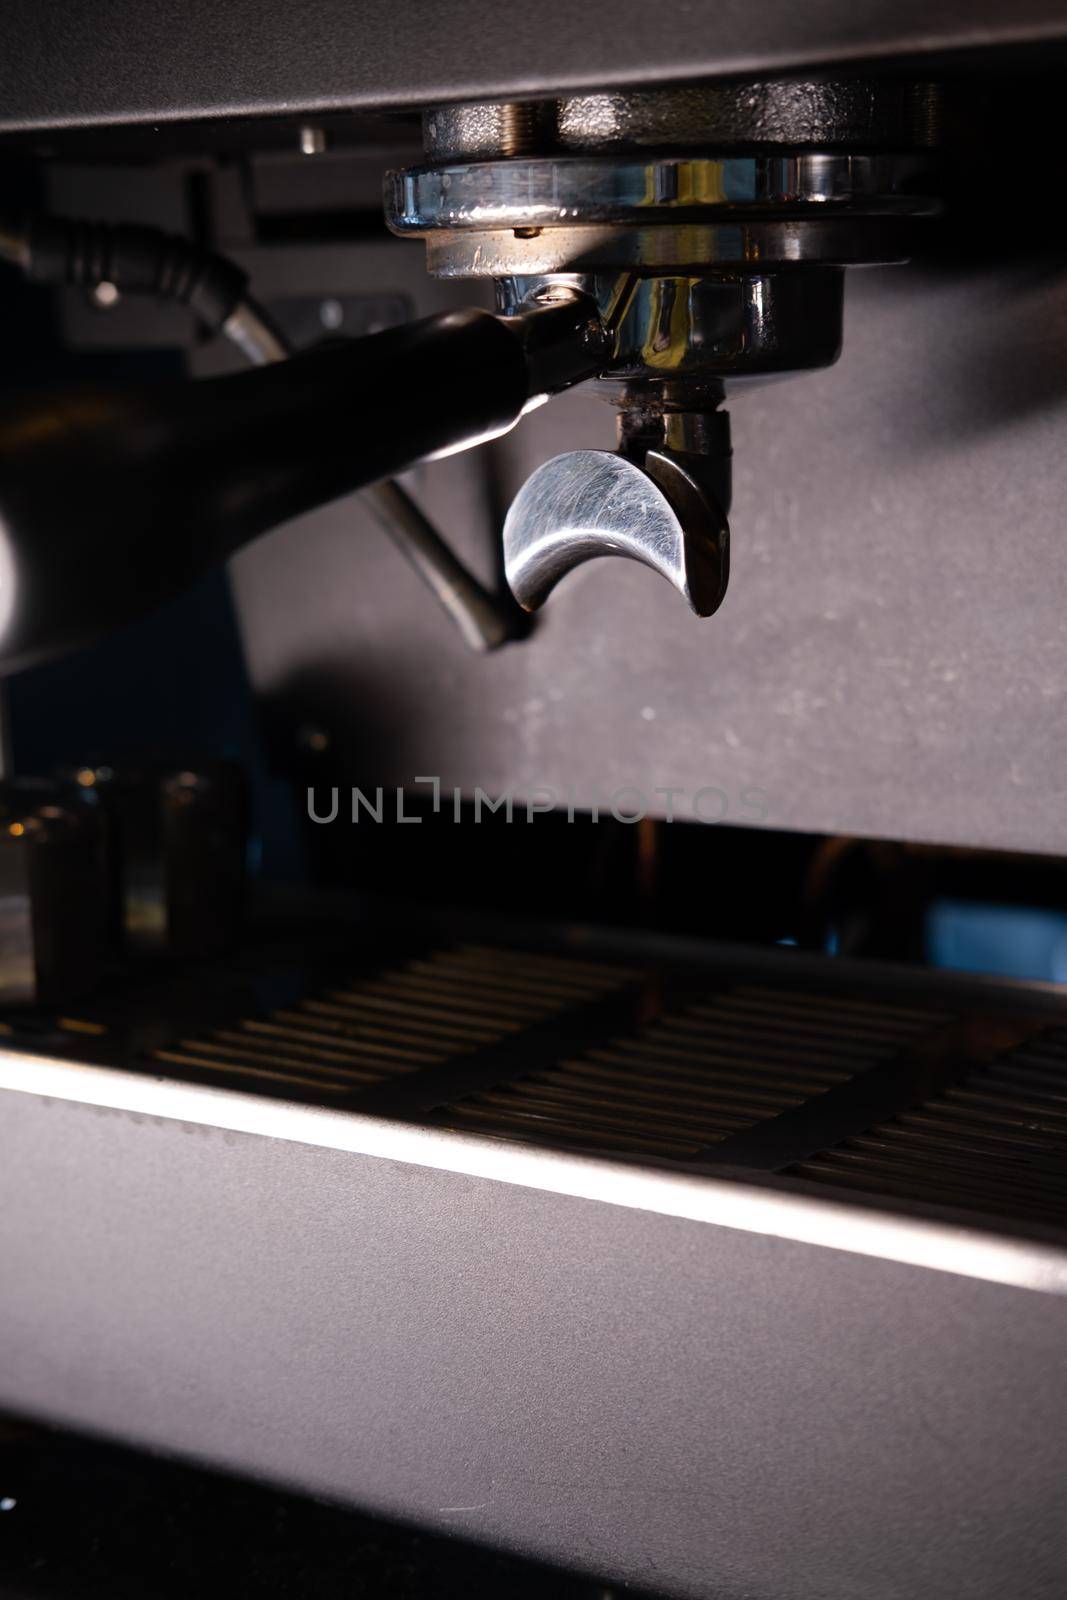 Close-up of Espresso machine making coffee in pub, bar, restaurant. Professional coffee brewing. Coffee Shop Cafeteria Restaurant Service Concept.